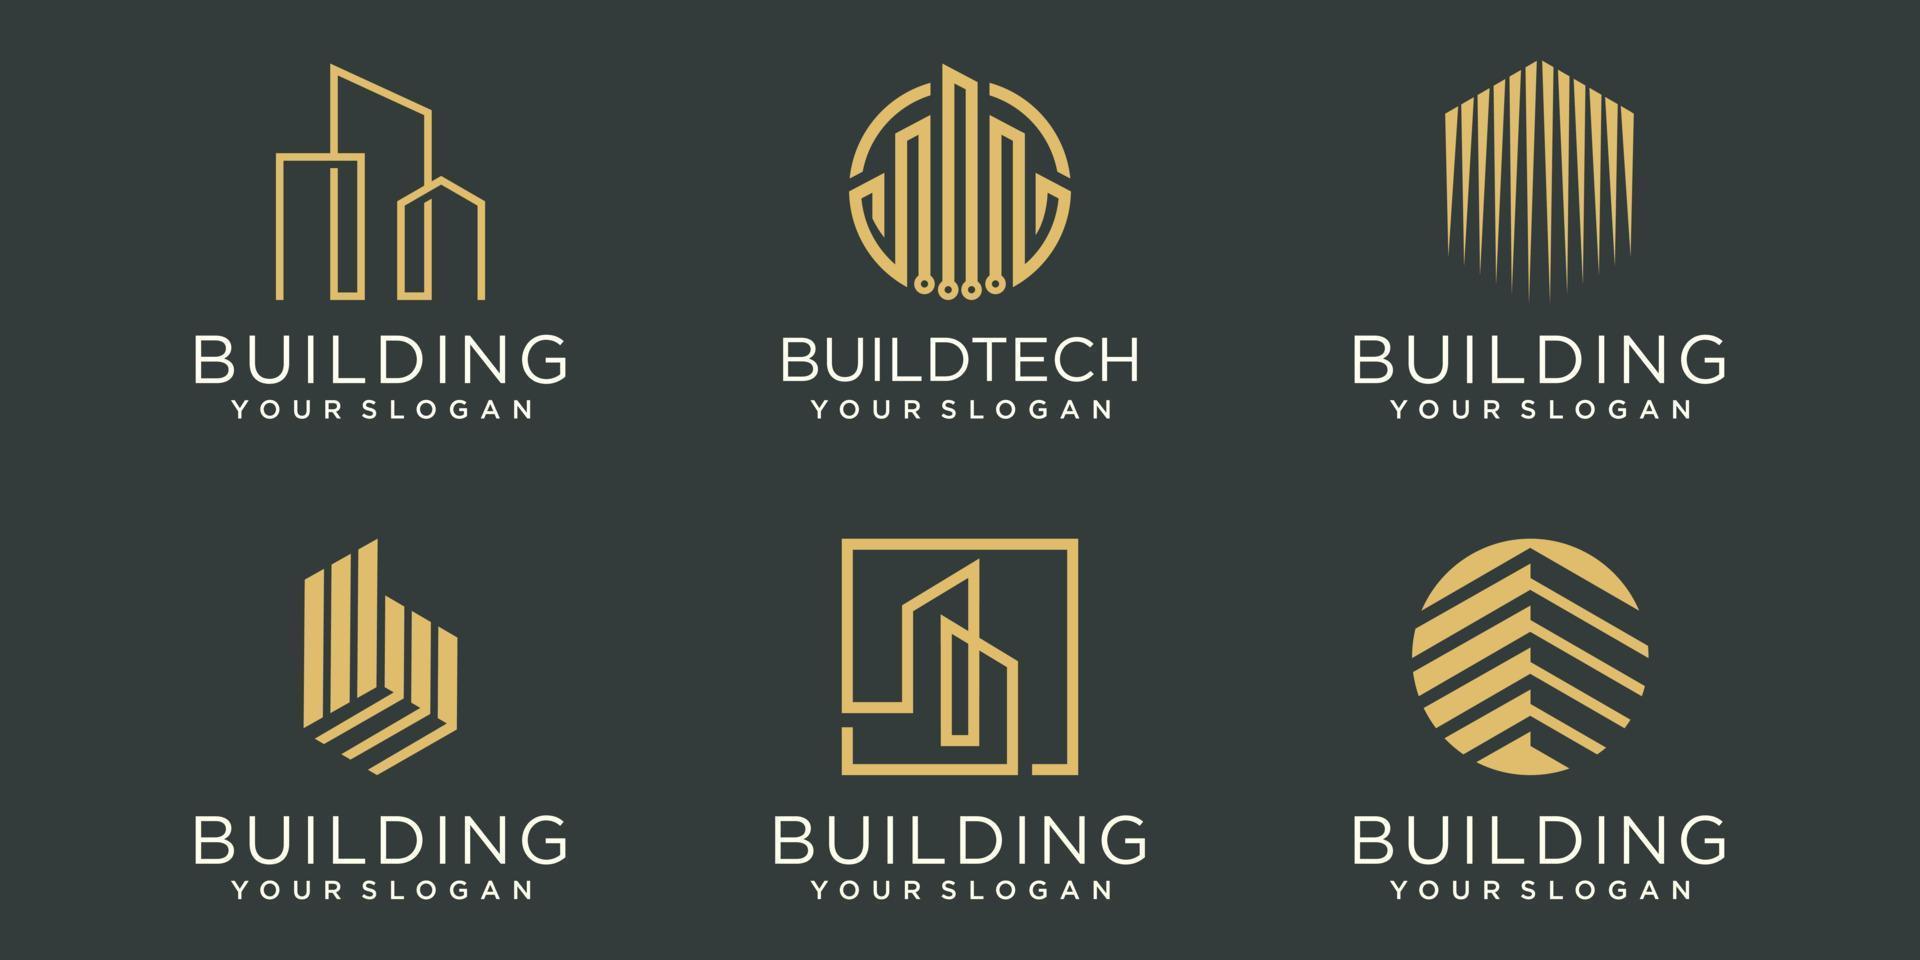 building logo icons set. city building abstract For Logo Design Inspiration. vector